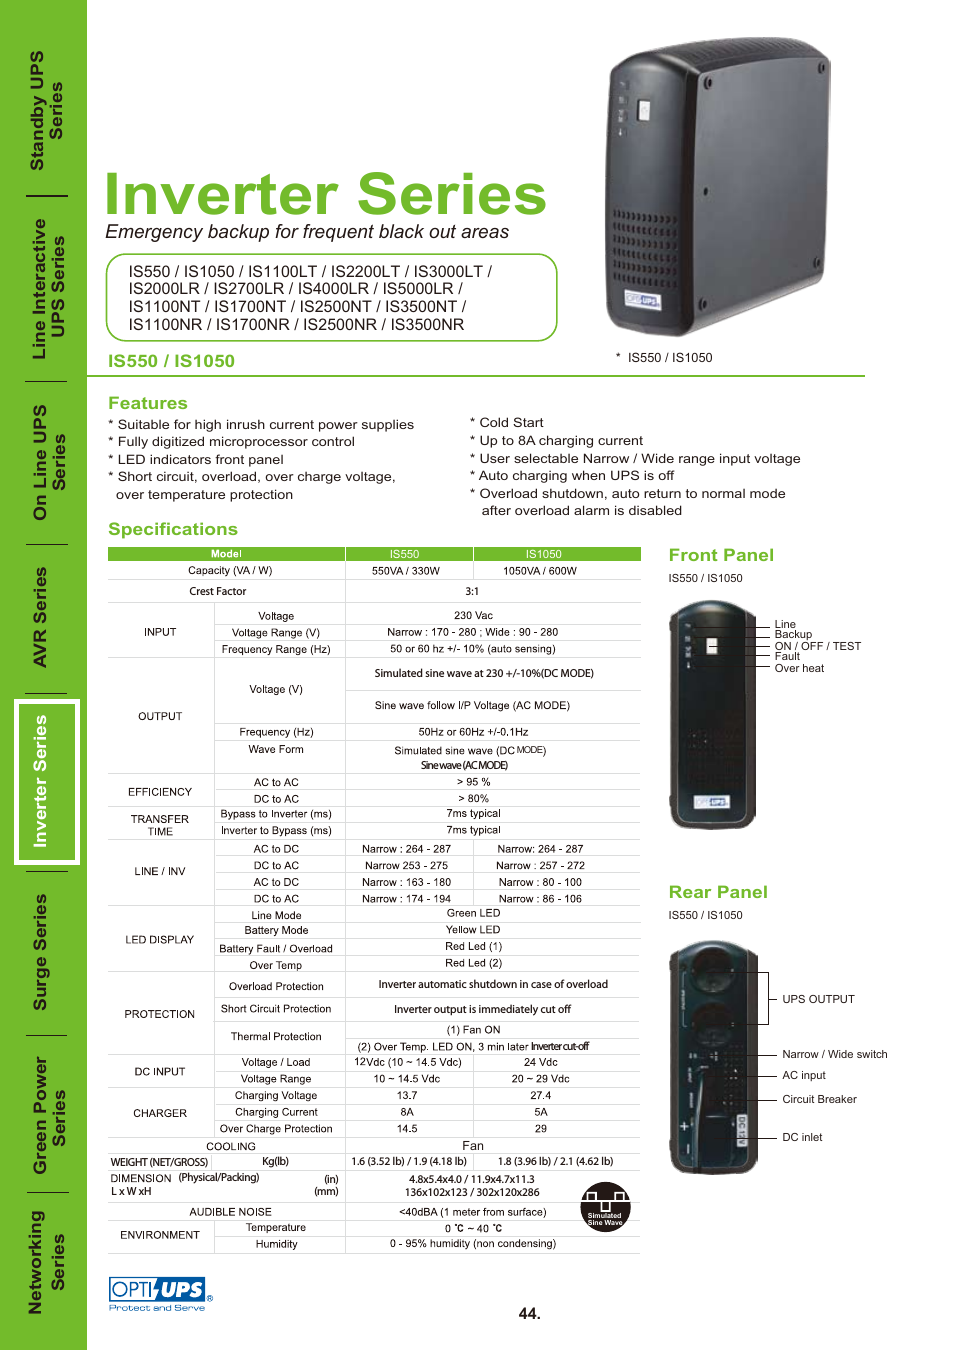 Inverter Series IS550